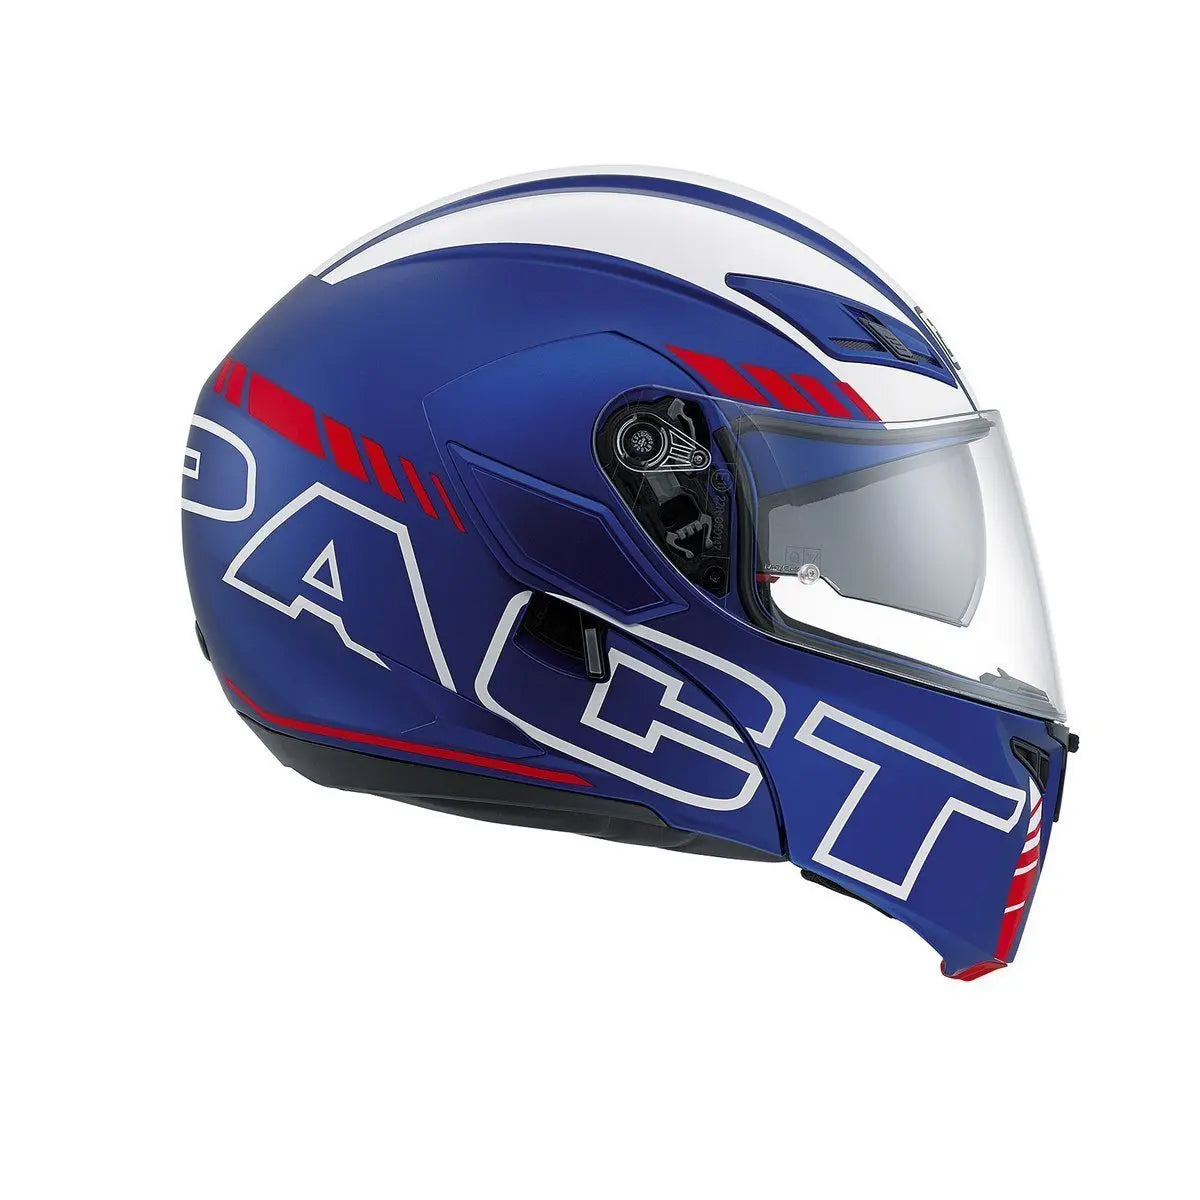 Helmets - AGV Compact ST Multi- Seattle Matt Helmet (Blue/Silver/Red)